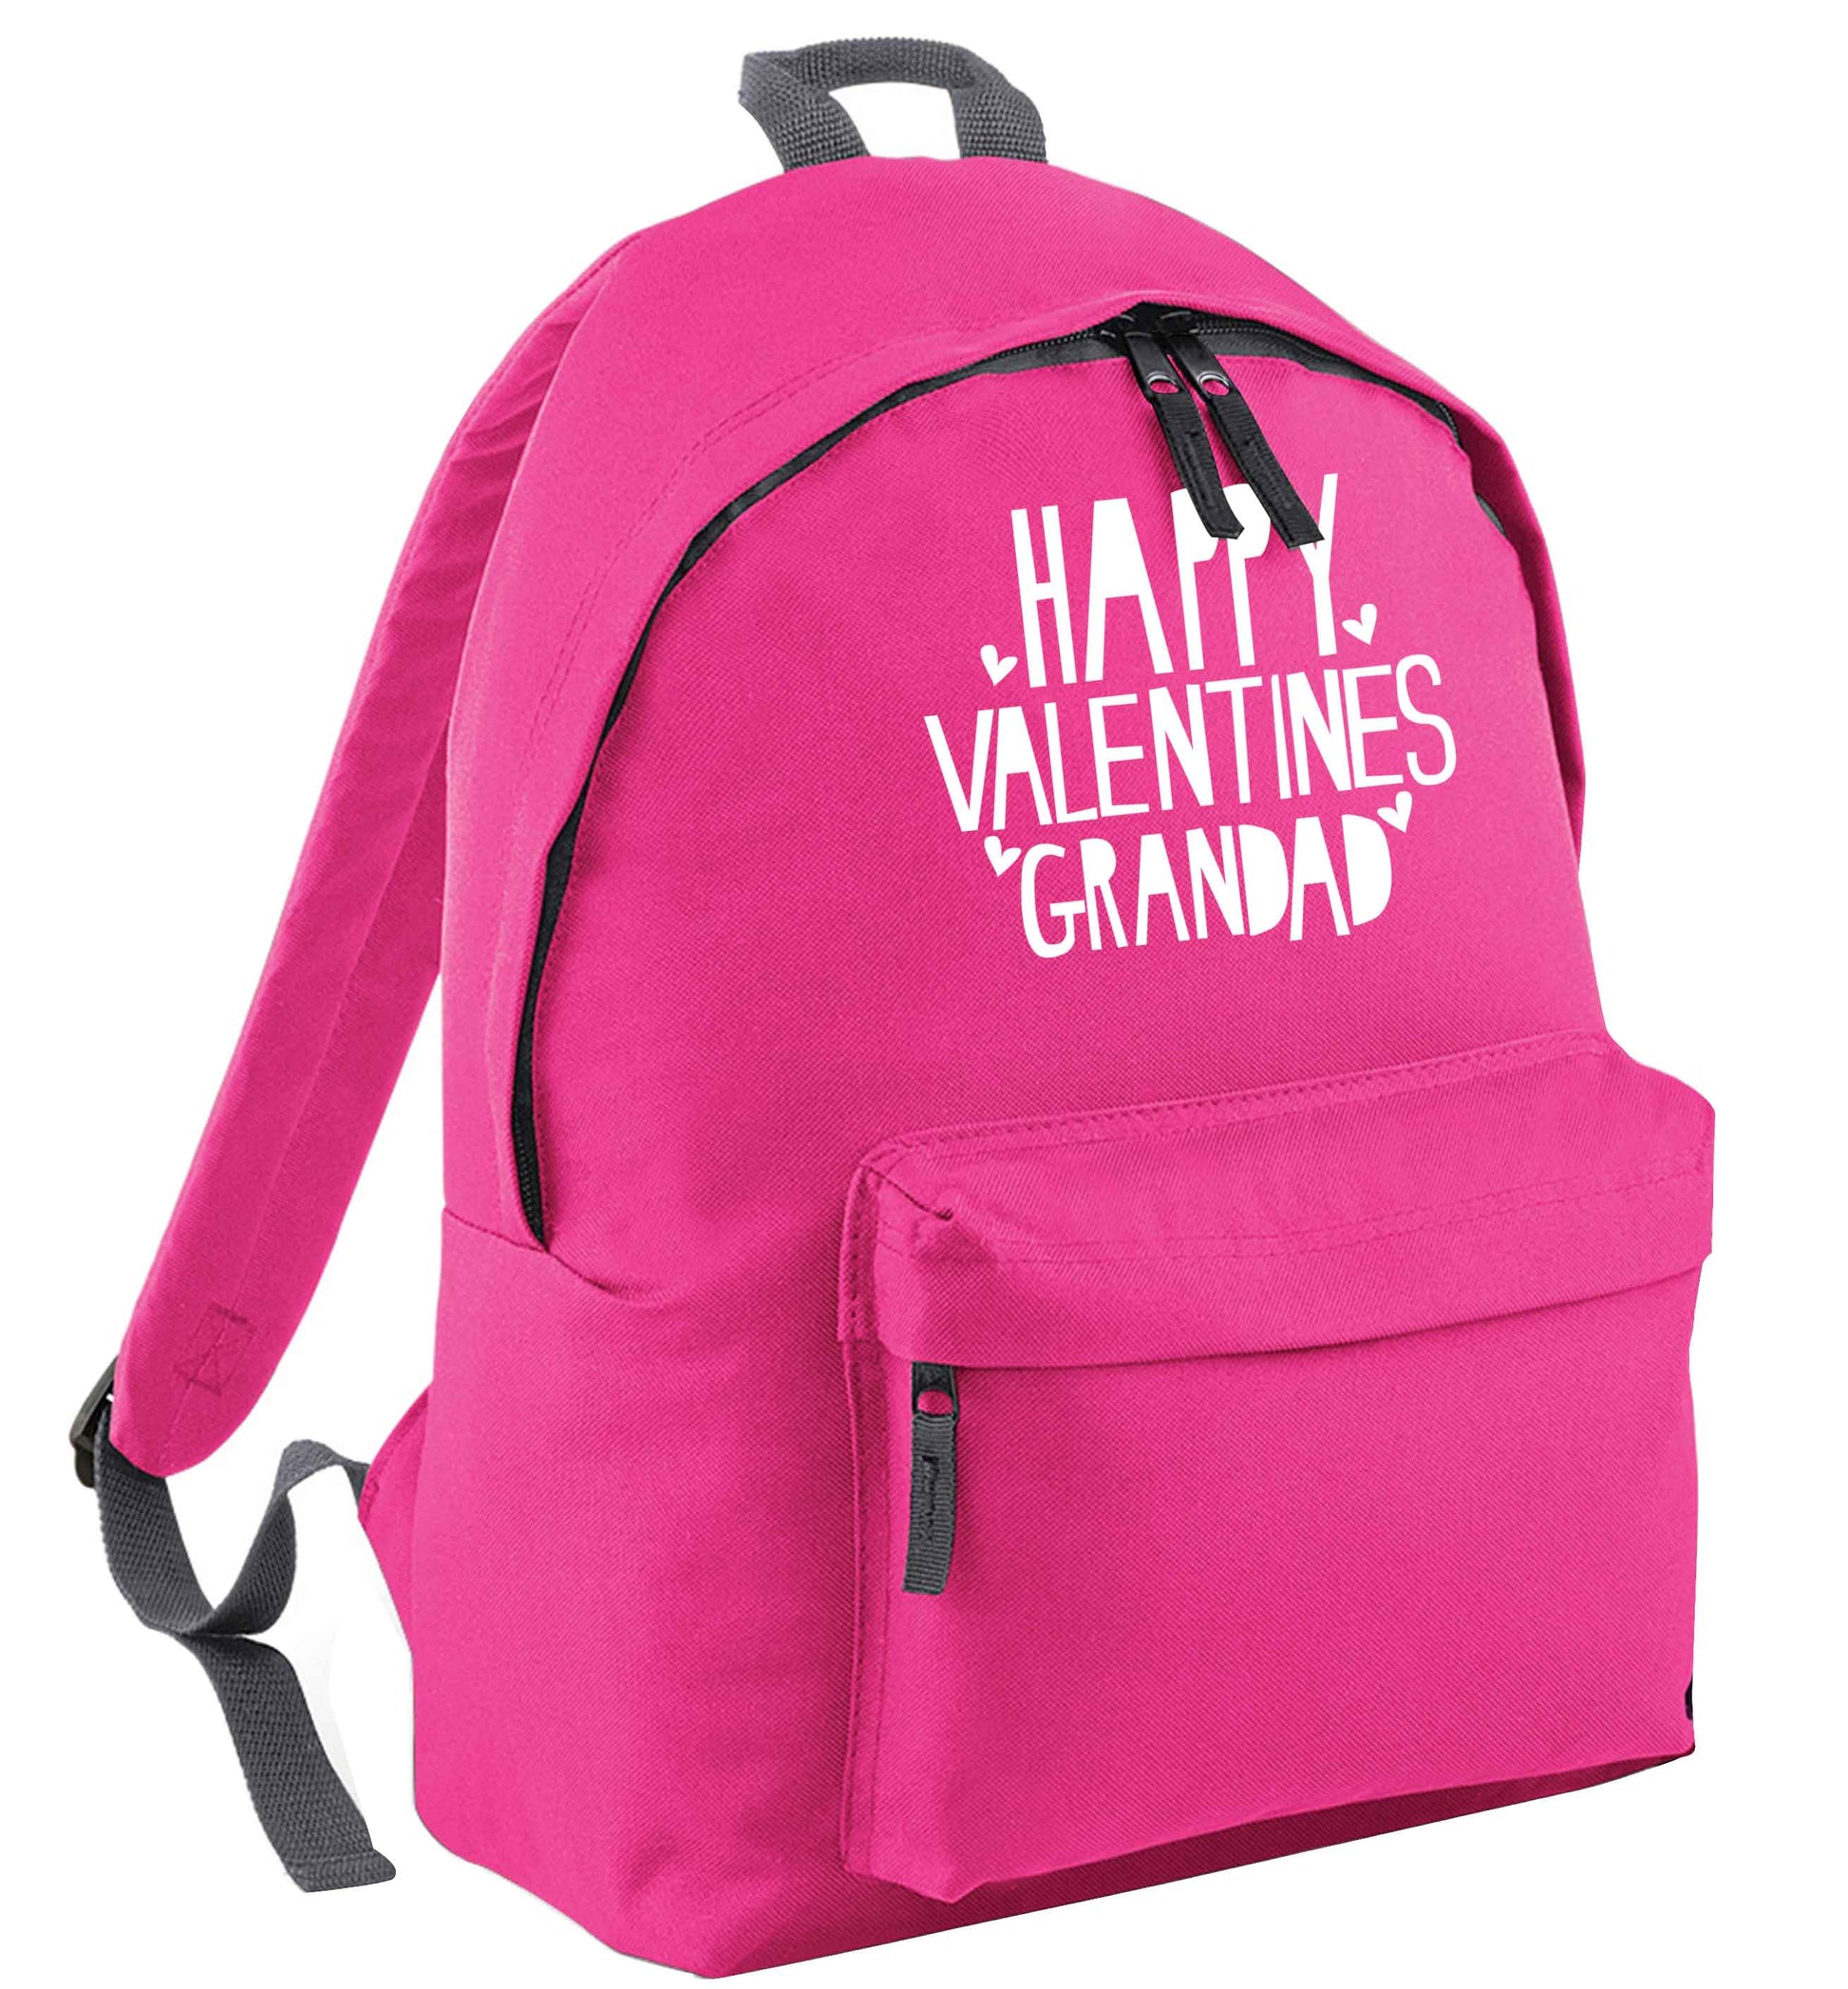 Happy valentines grandad pink childrens backpack